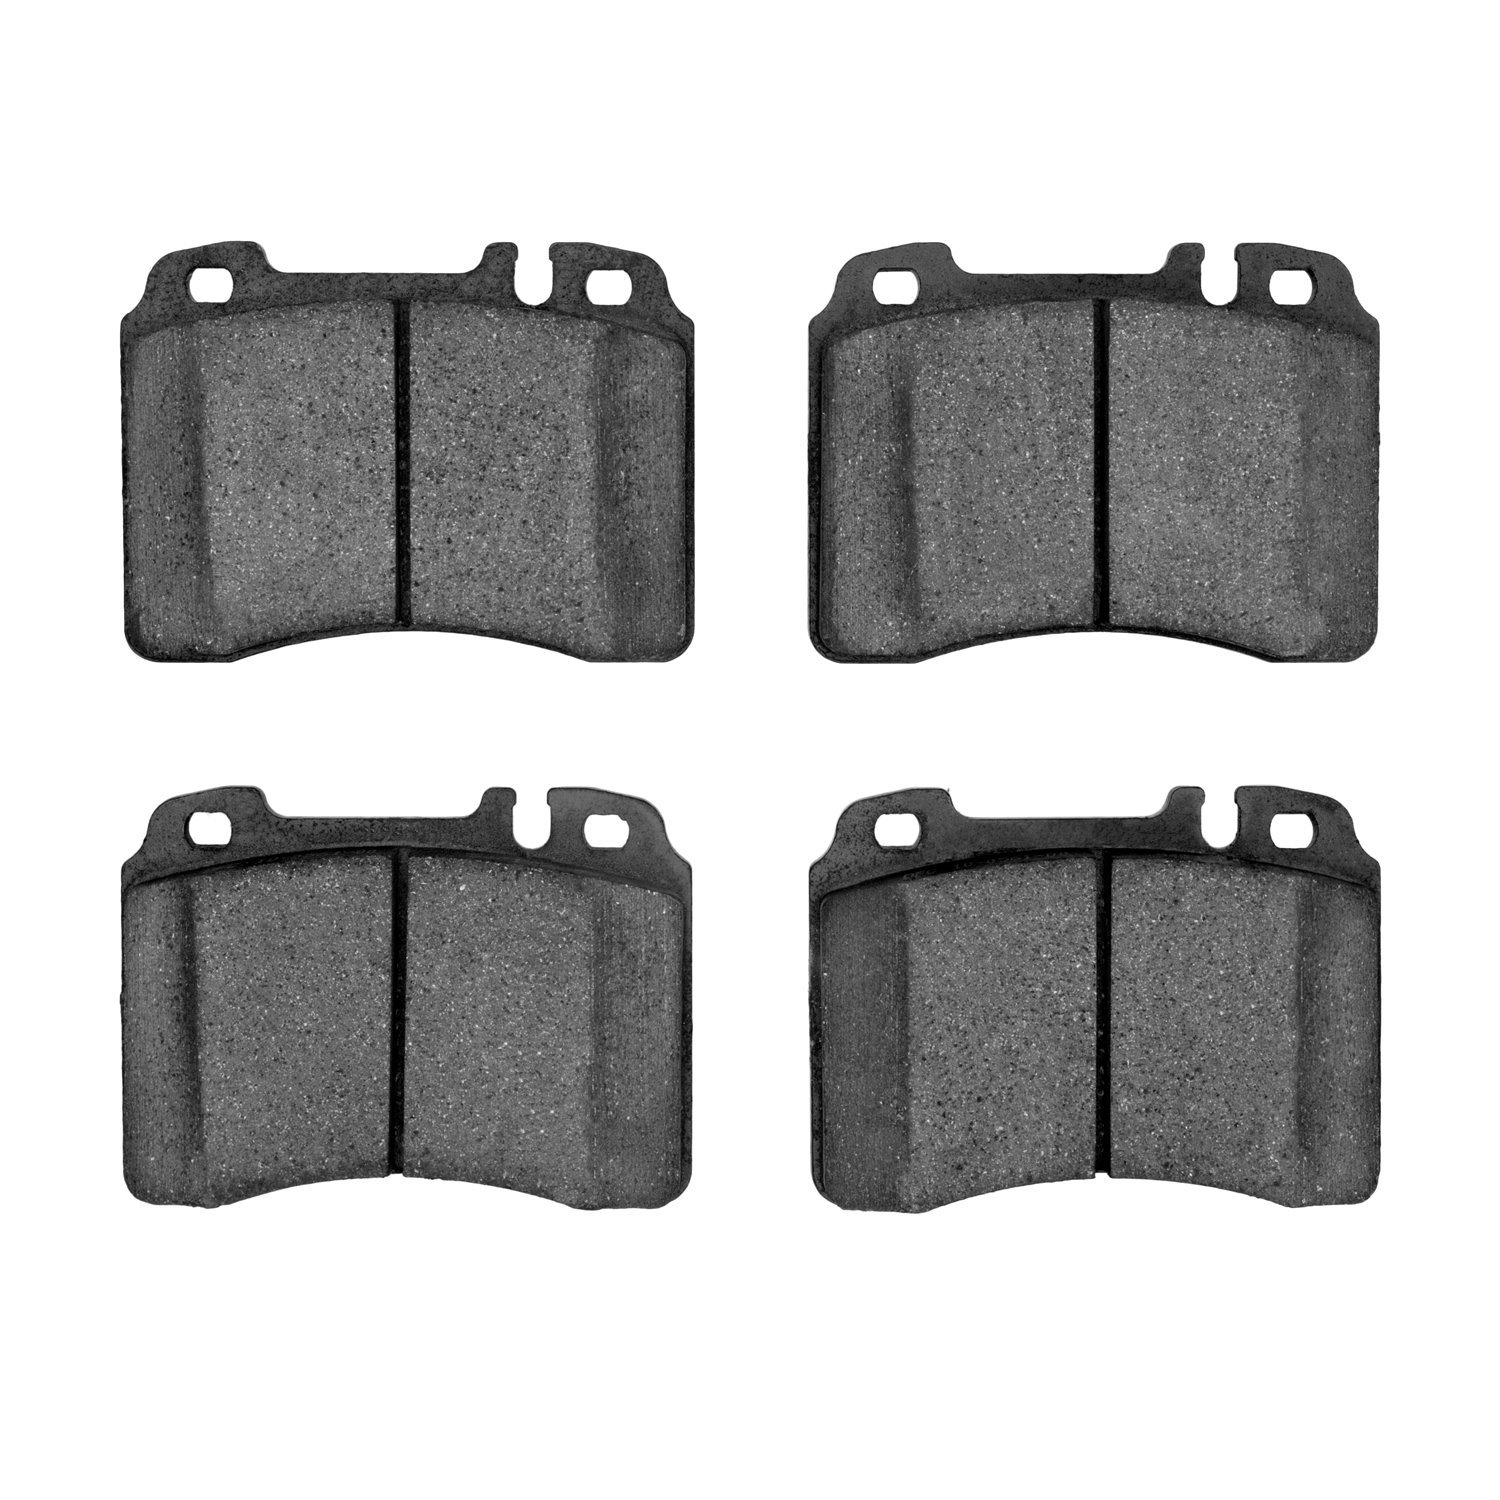 1310-0561-00 3000-Series Ceramic Brake Pads, 1990-2002 Multiple Makes/Models, Position: Front